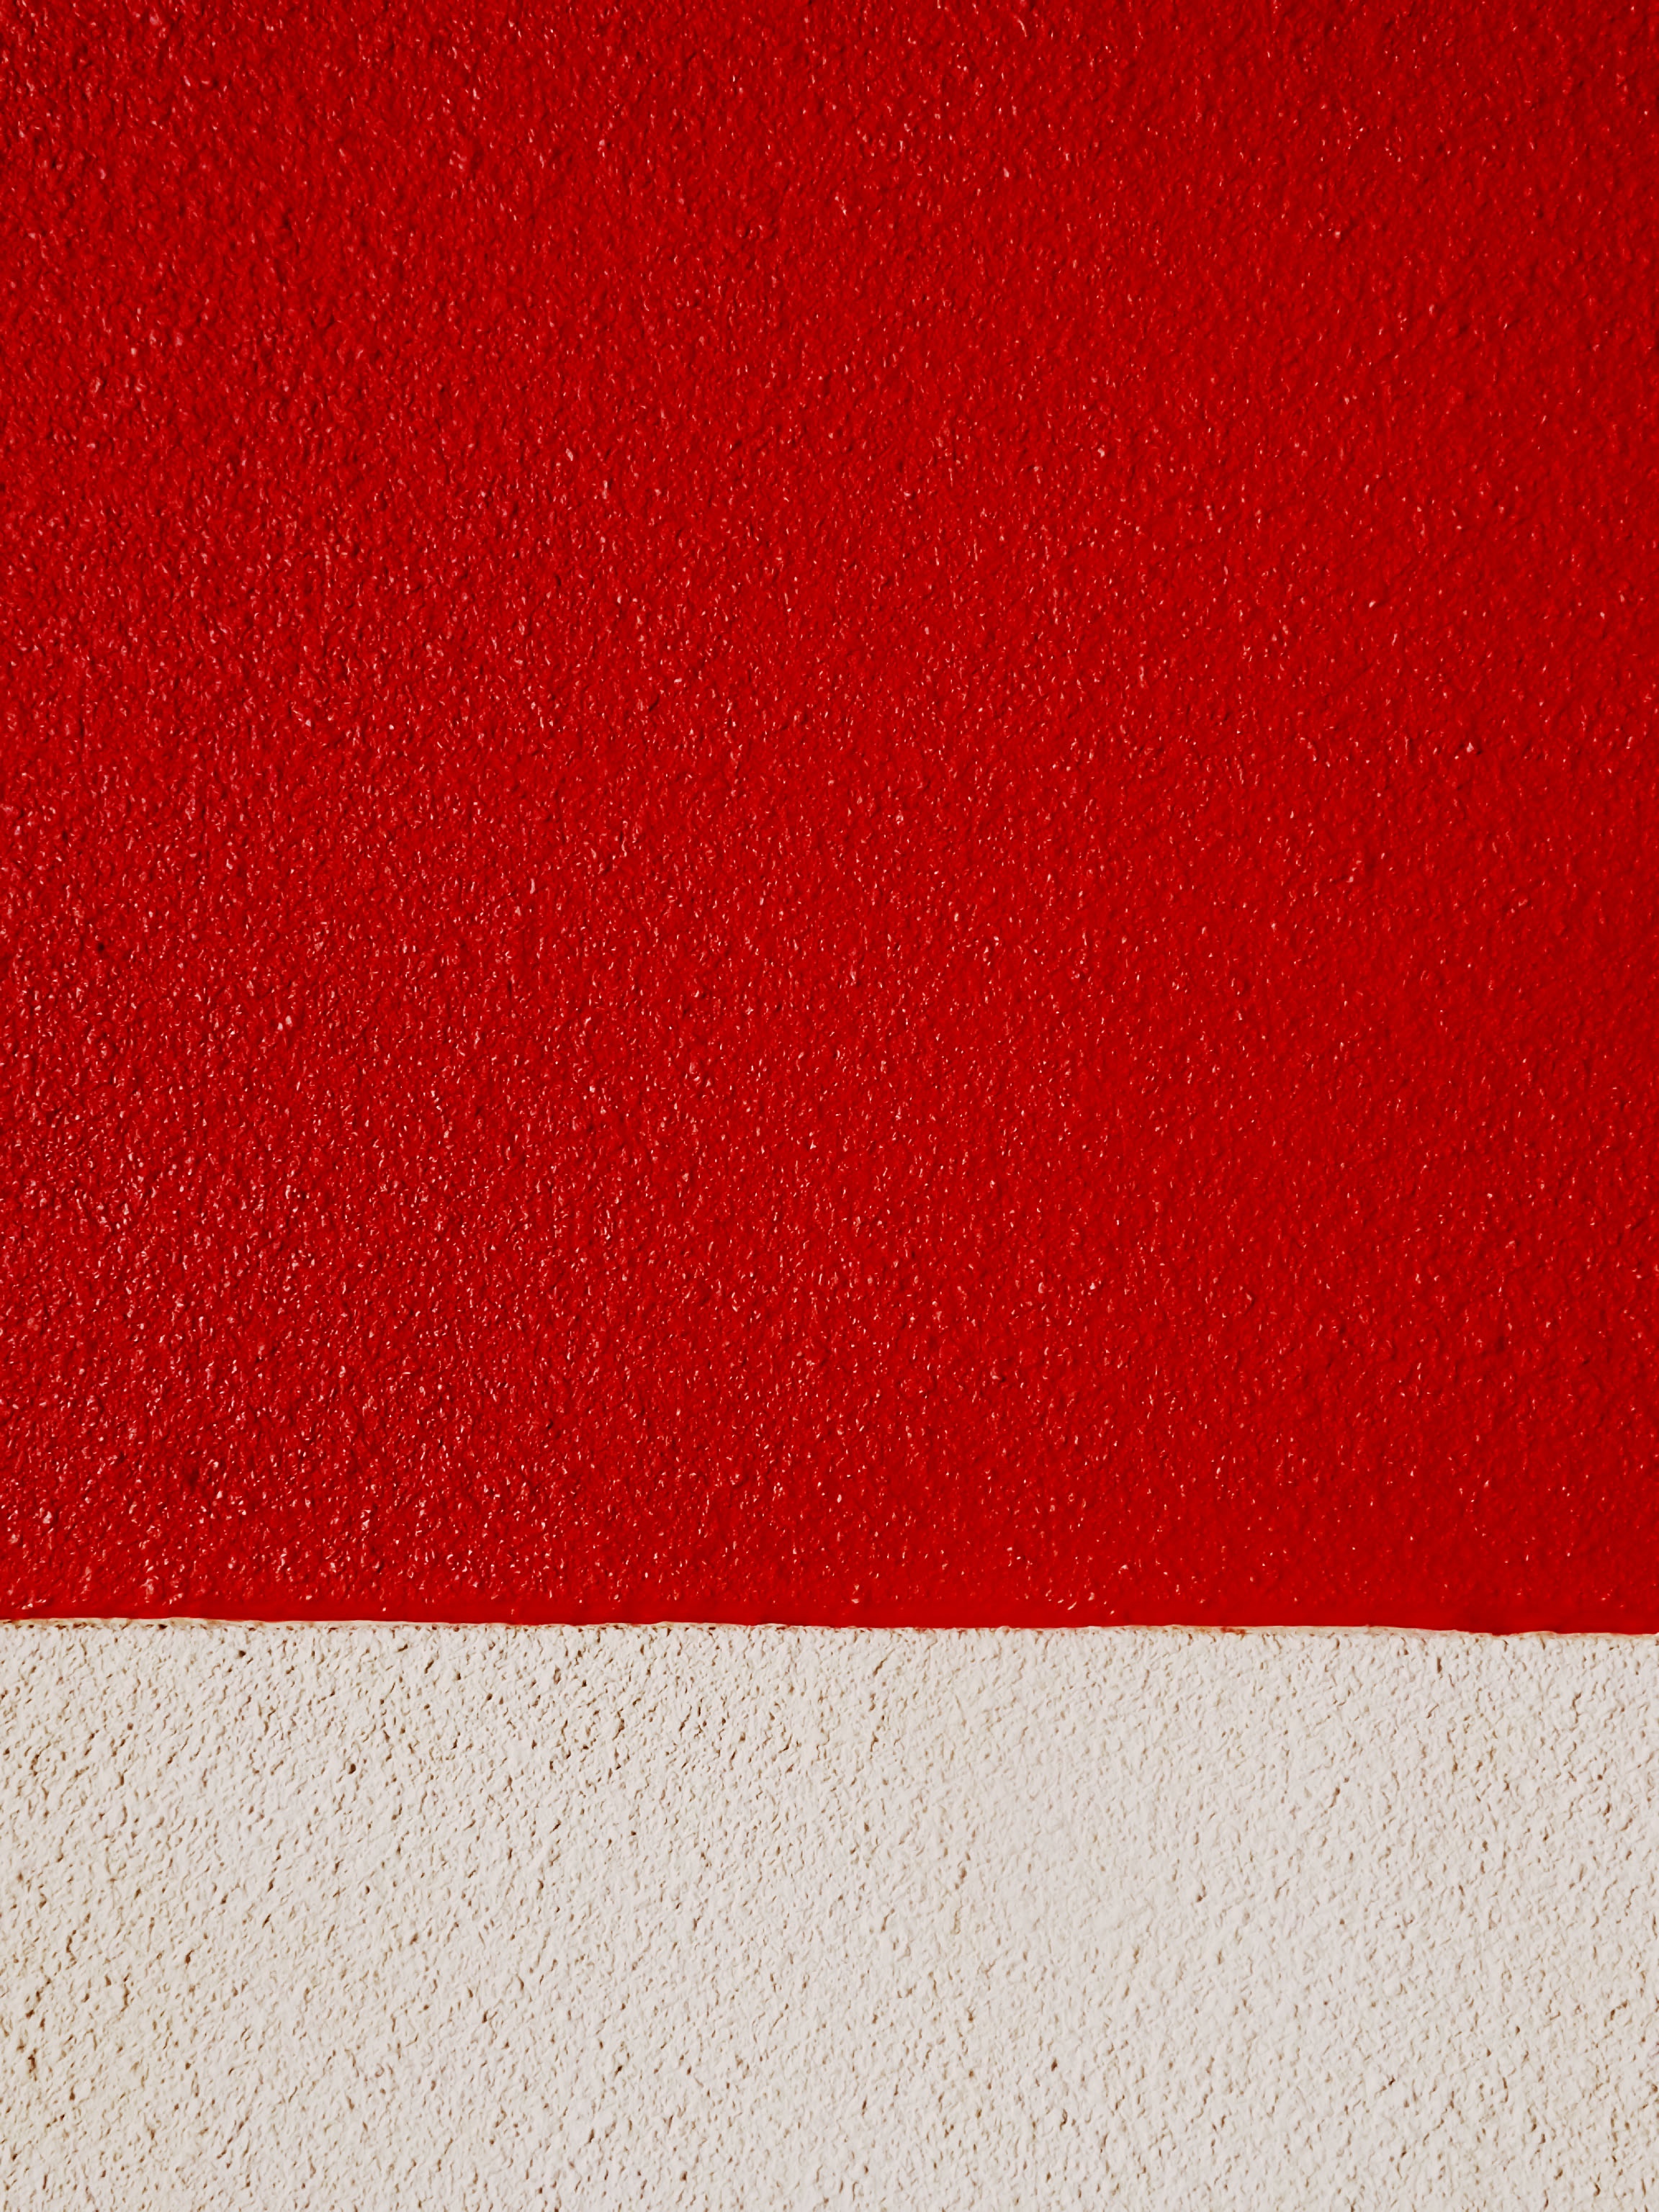 desktop Images texture, paint, red, textures, wall, rough